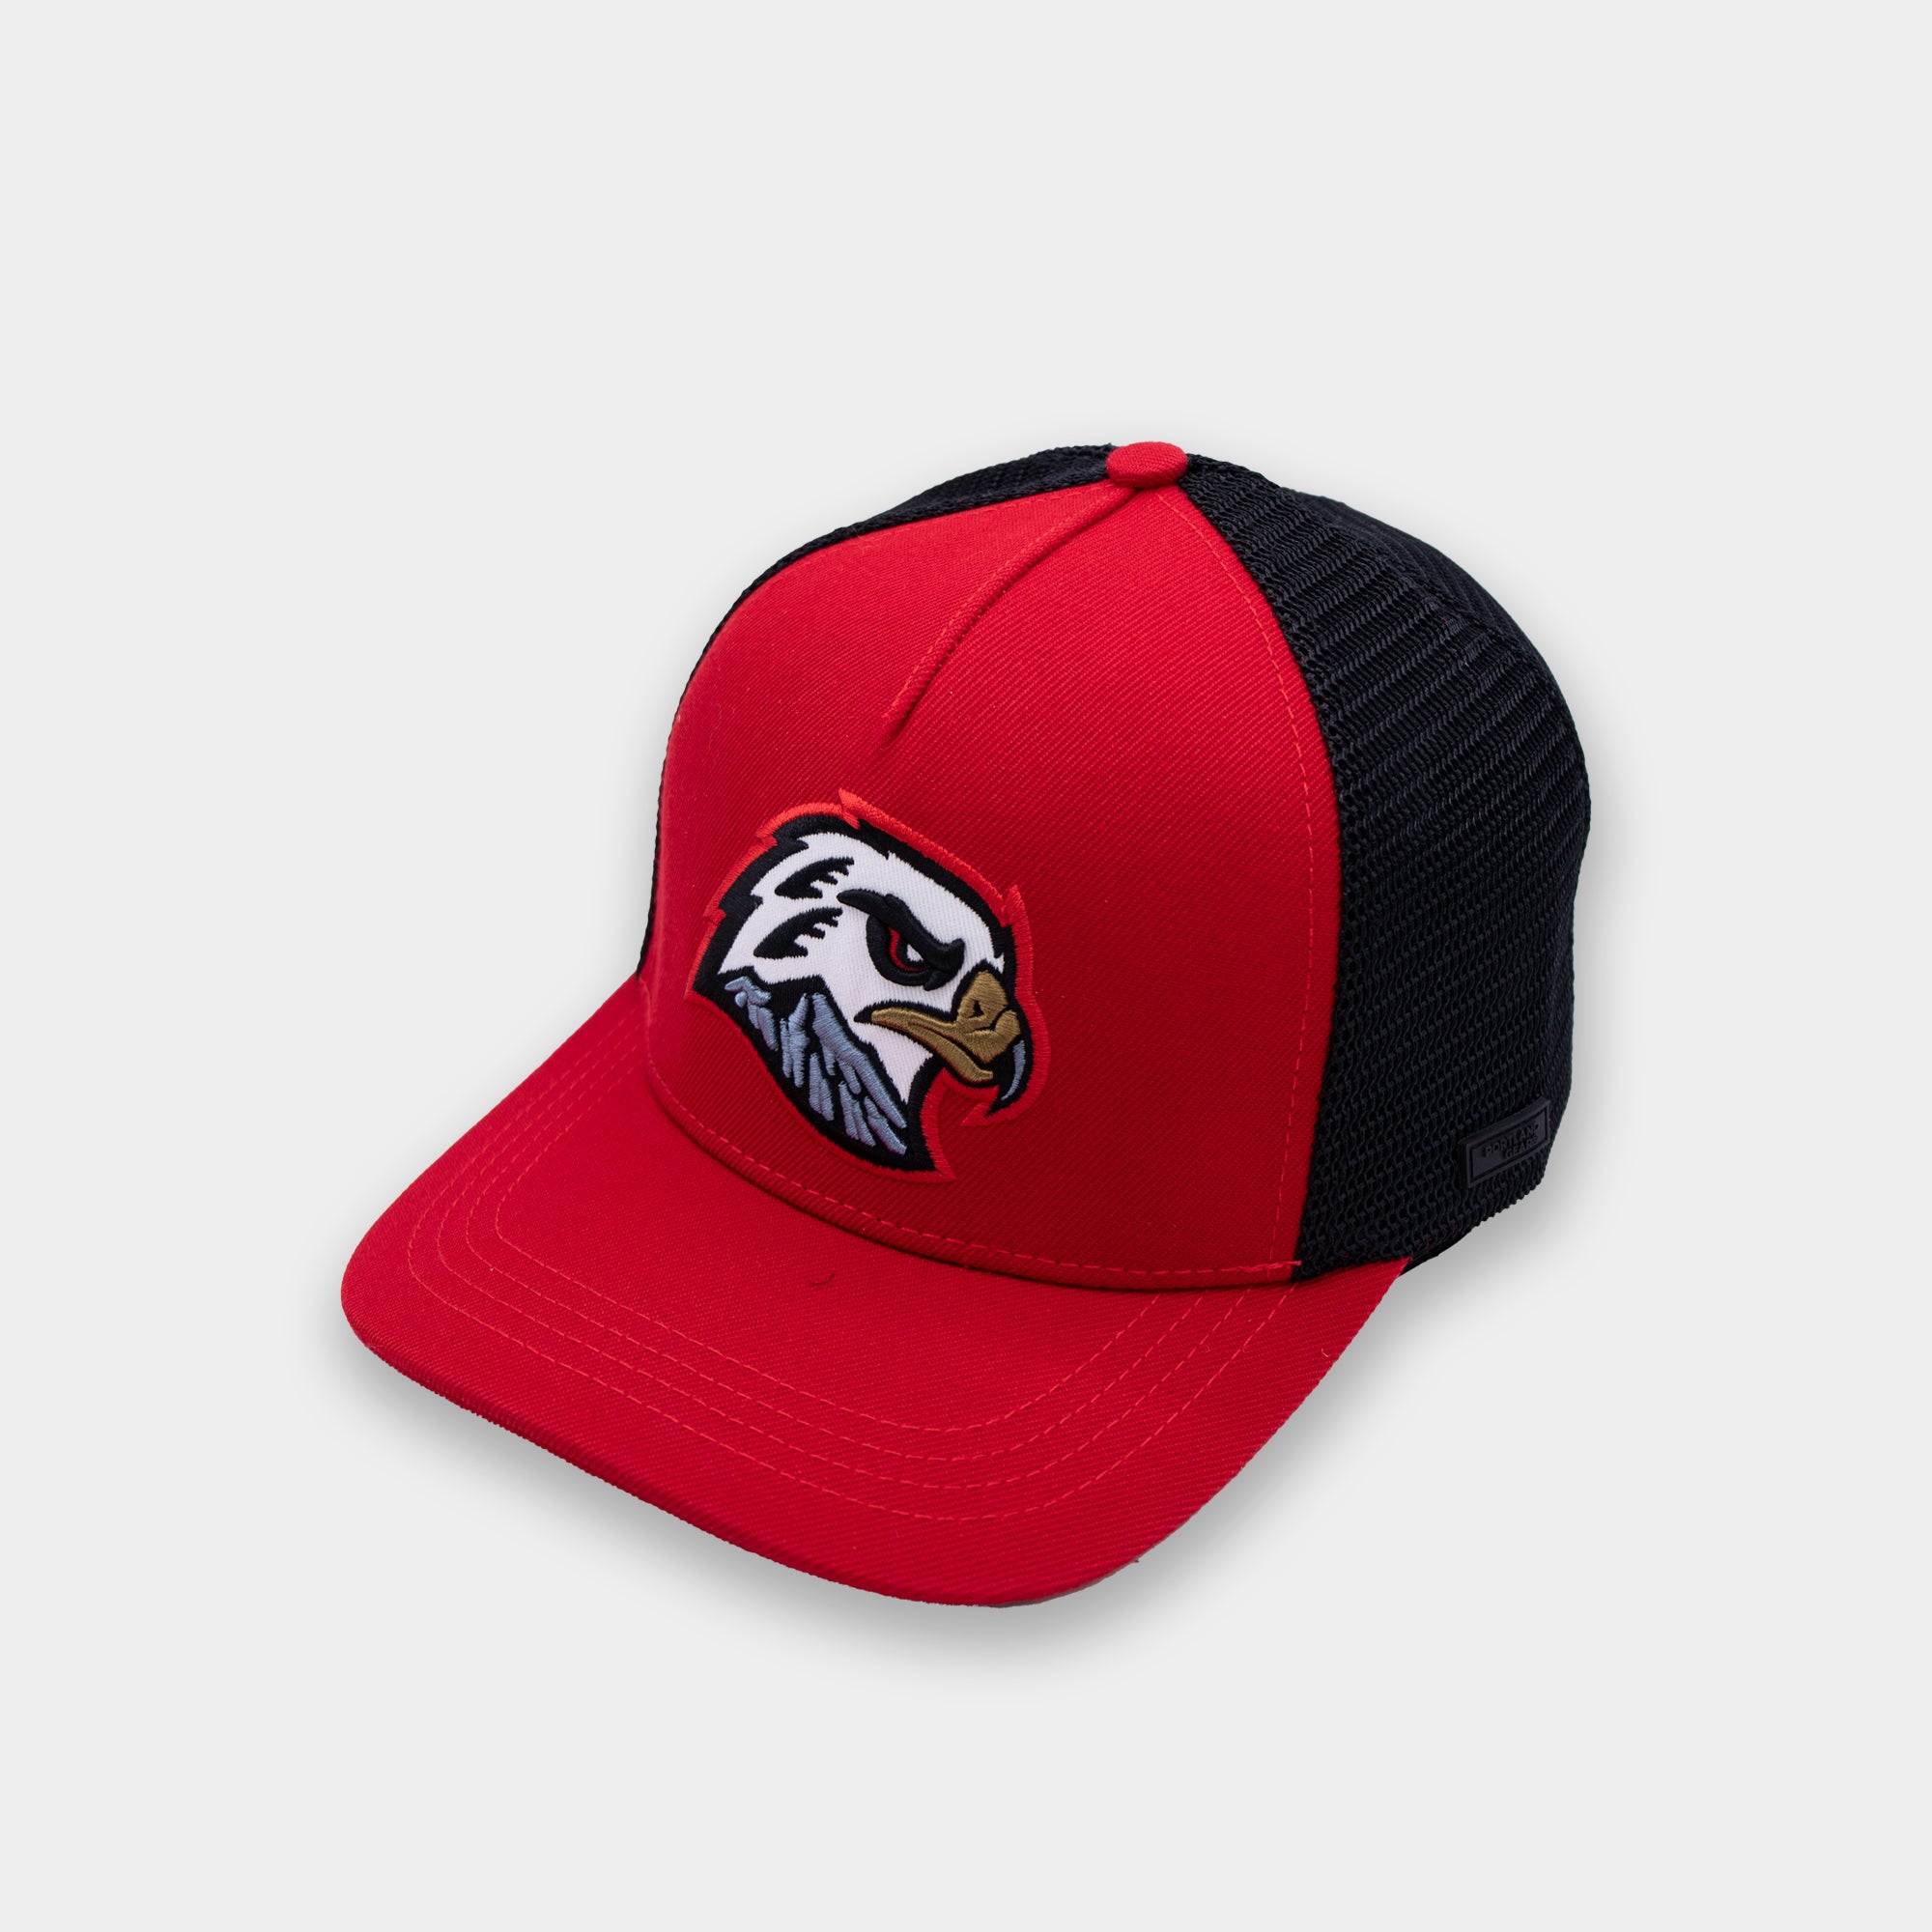 Hawk Head Mesh Cap - Red/Black